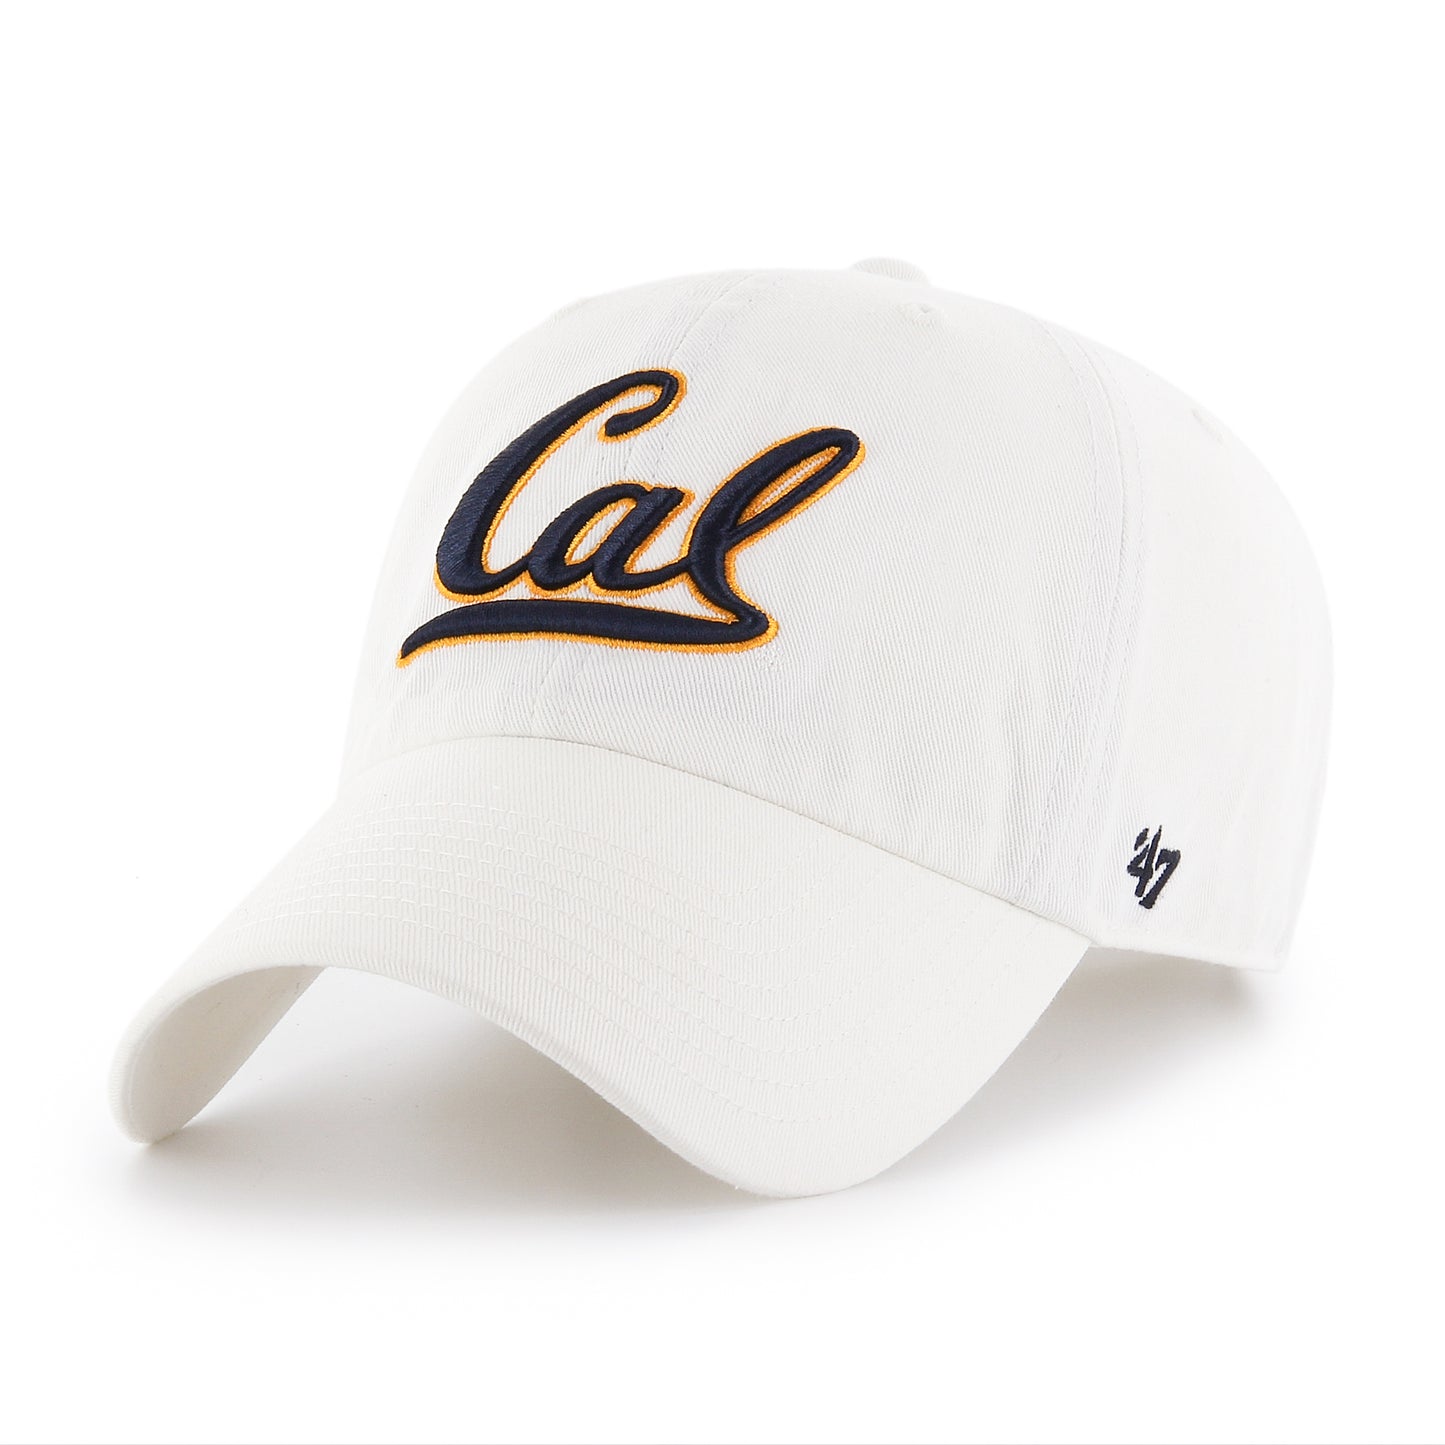 U.C. Berkeley Cal Embroidered adjustable hat-White-Shop College Wear